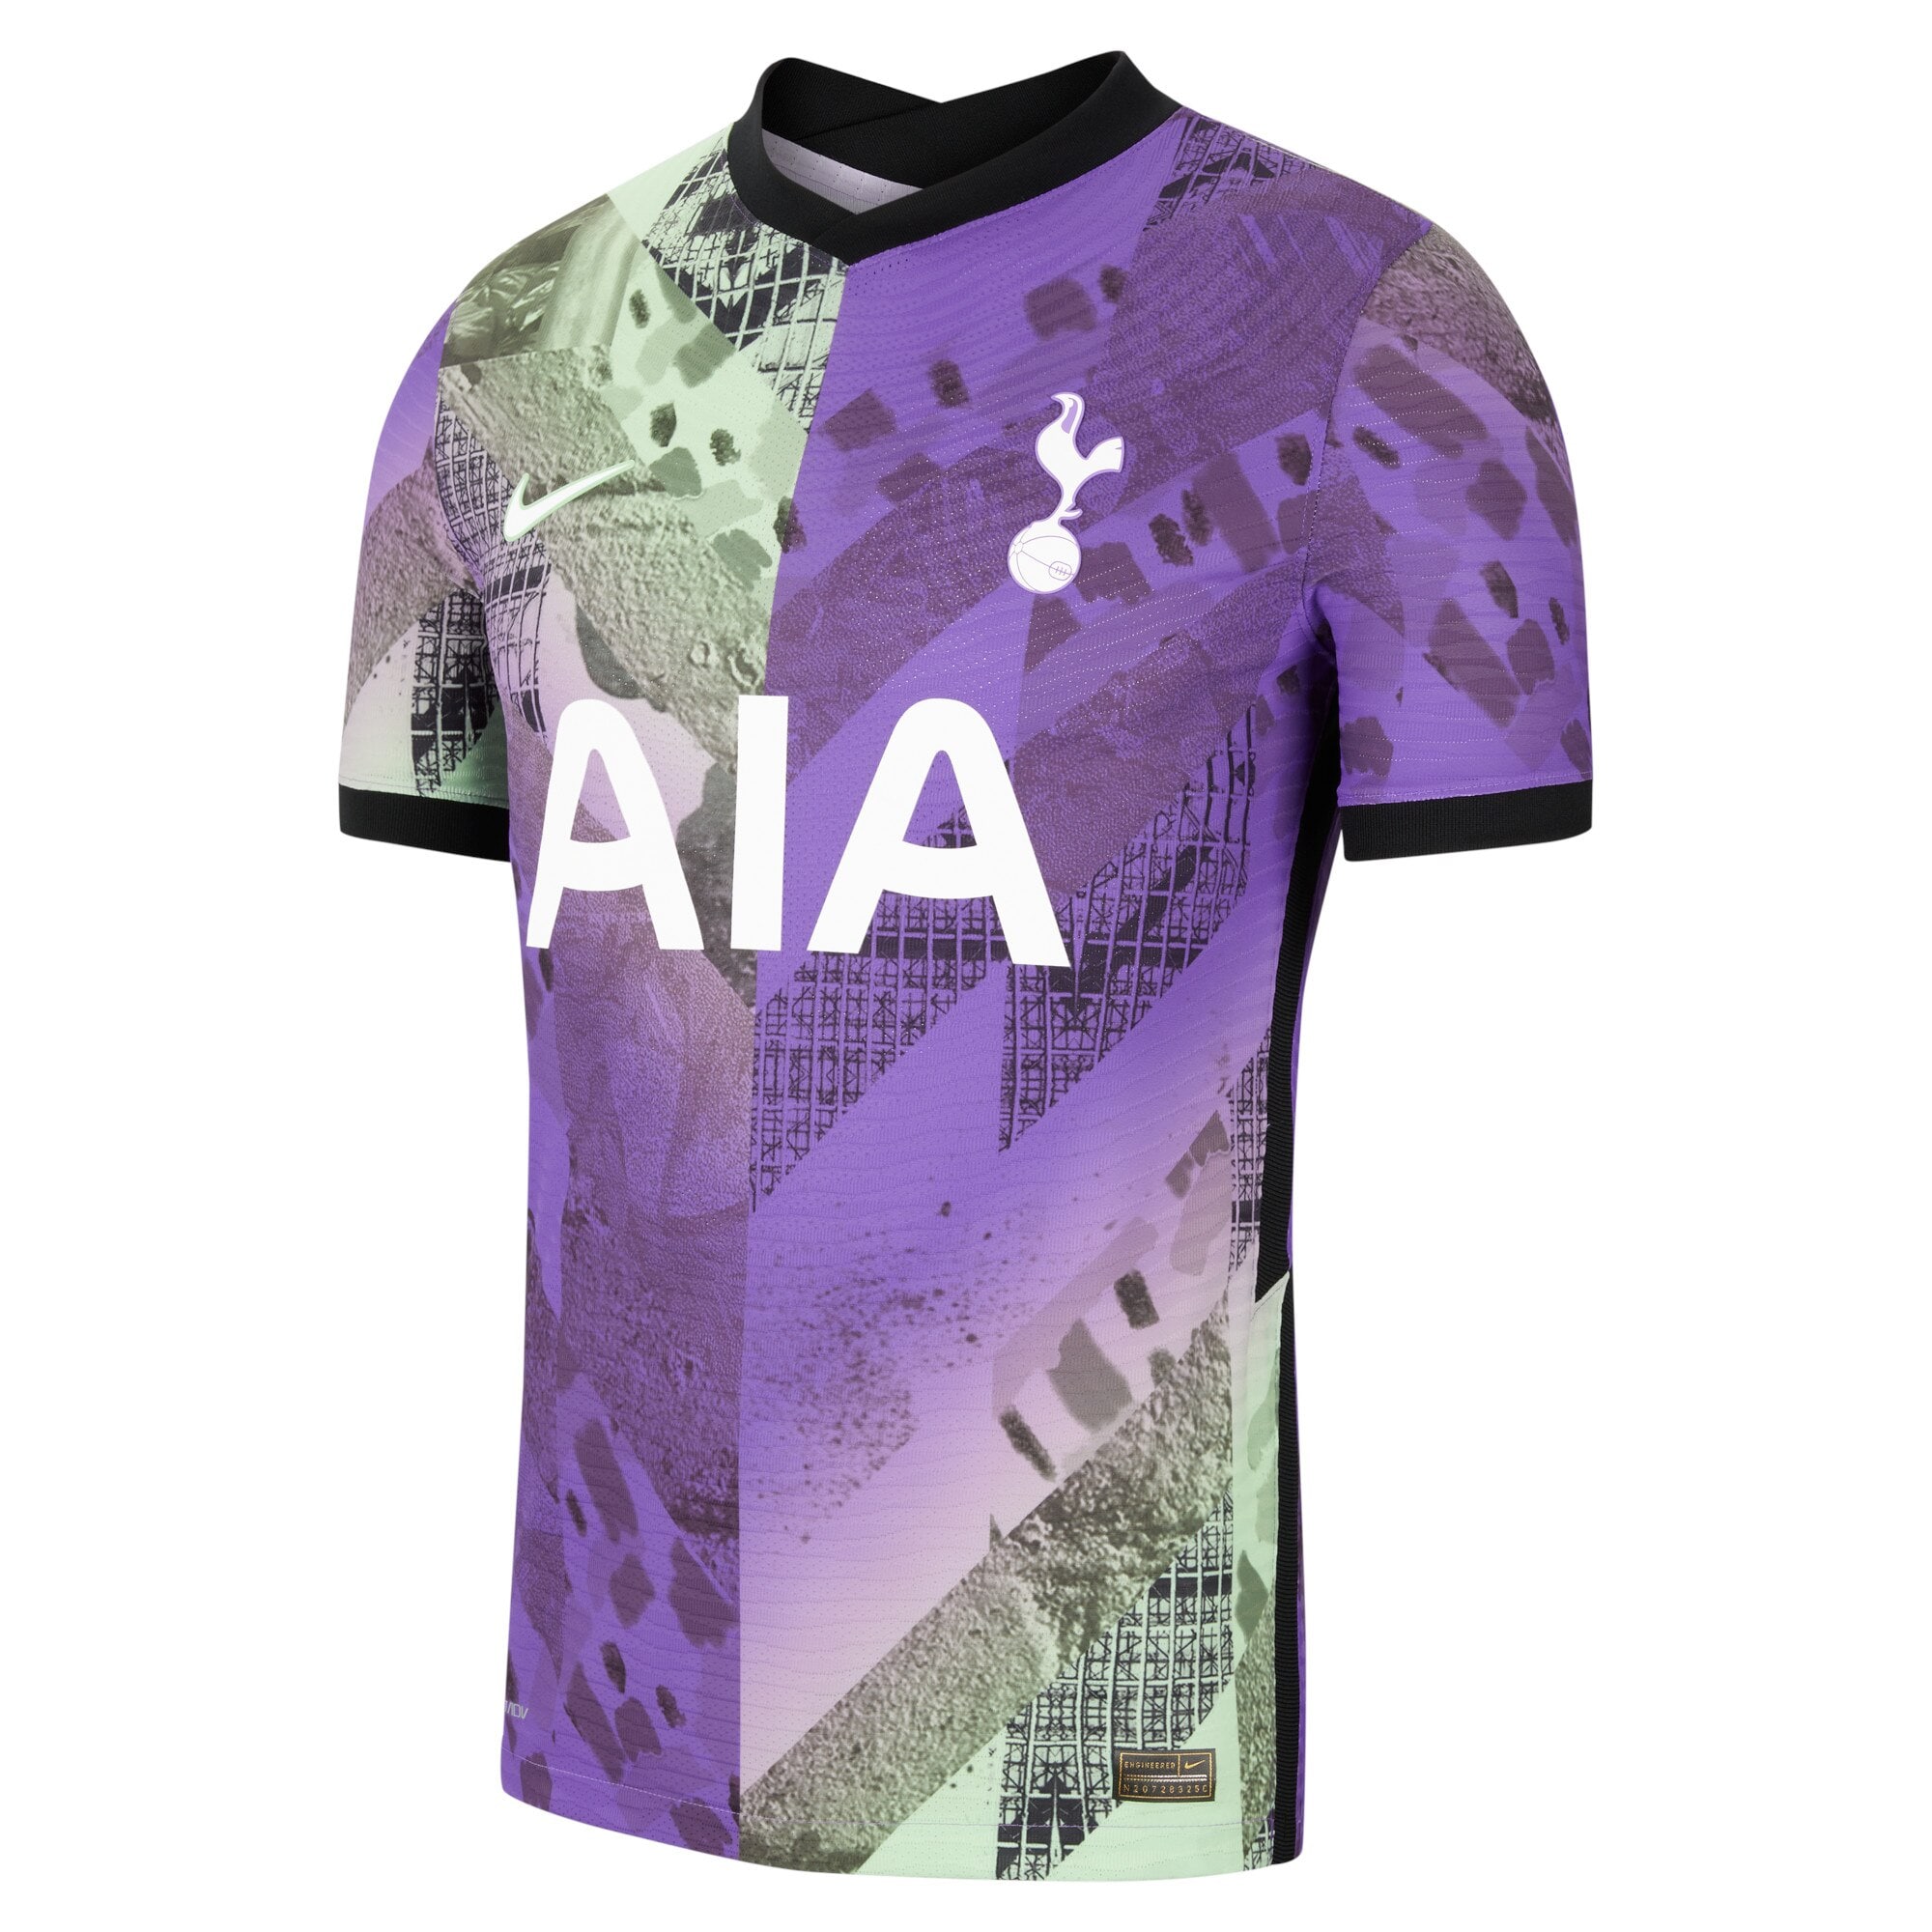 Tottenham Hotspur Third Vapor Match Shirt 2021-22 with Kane 10 printing